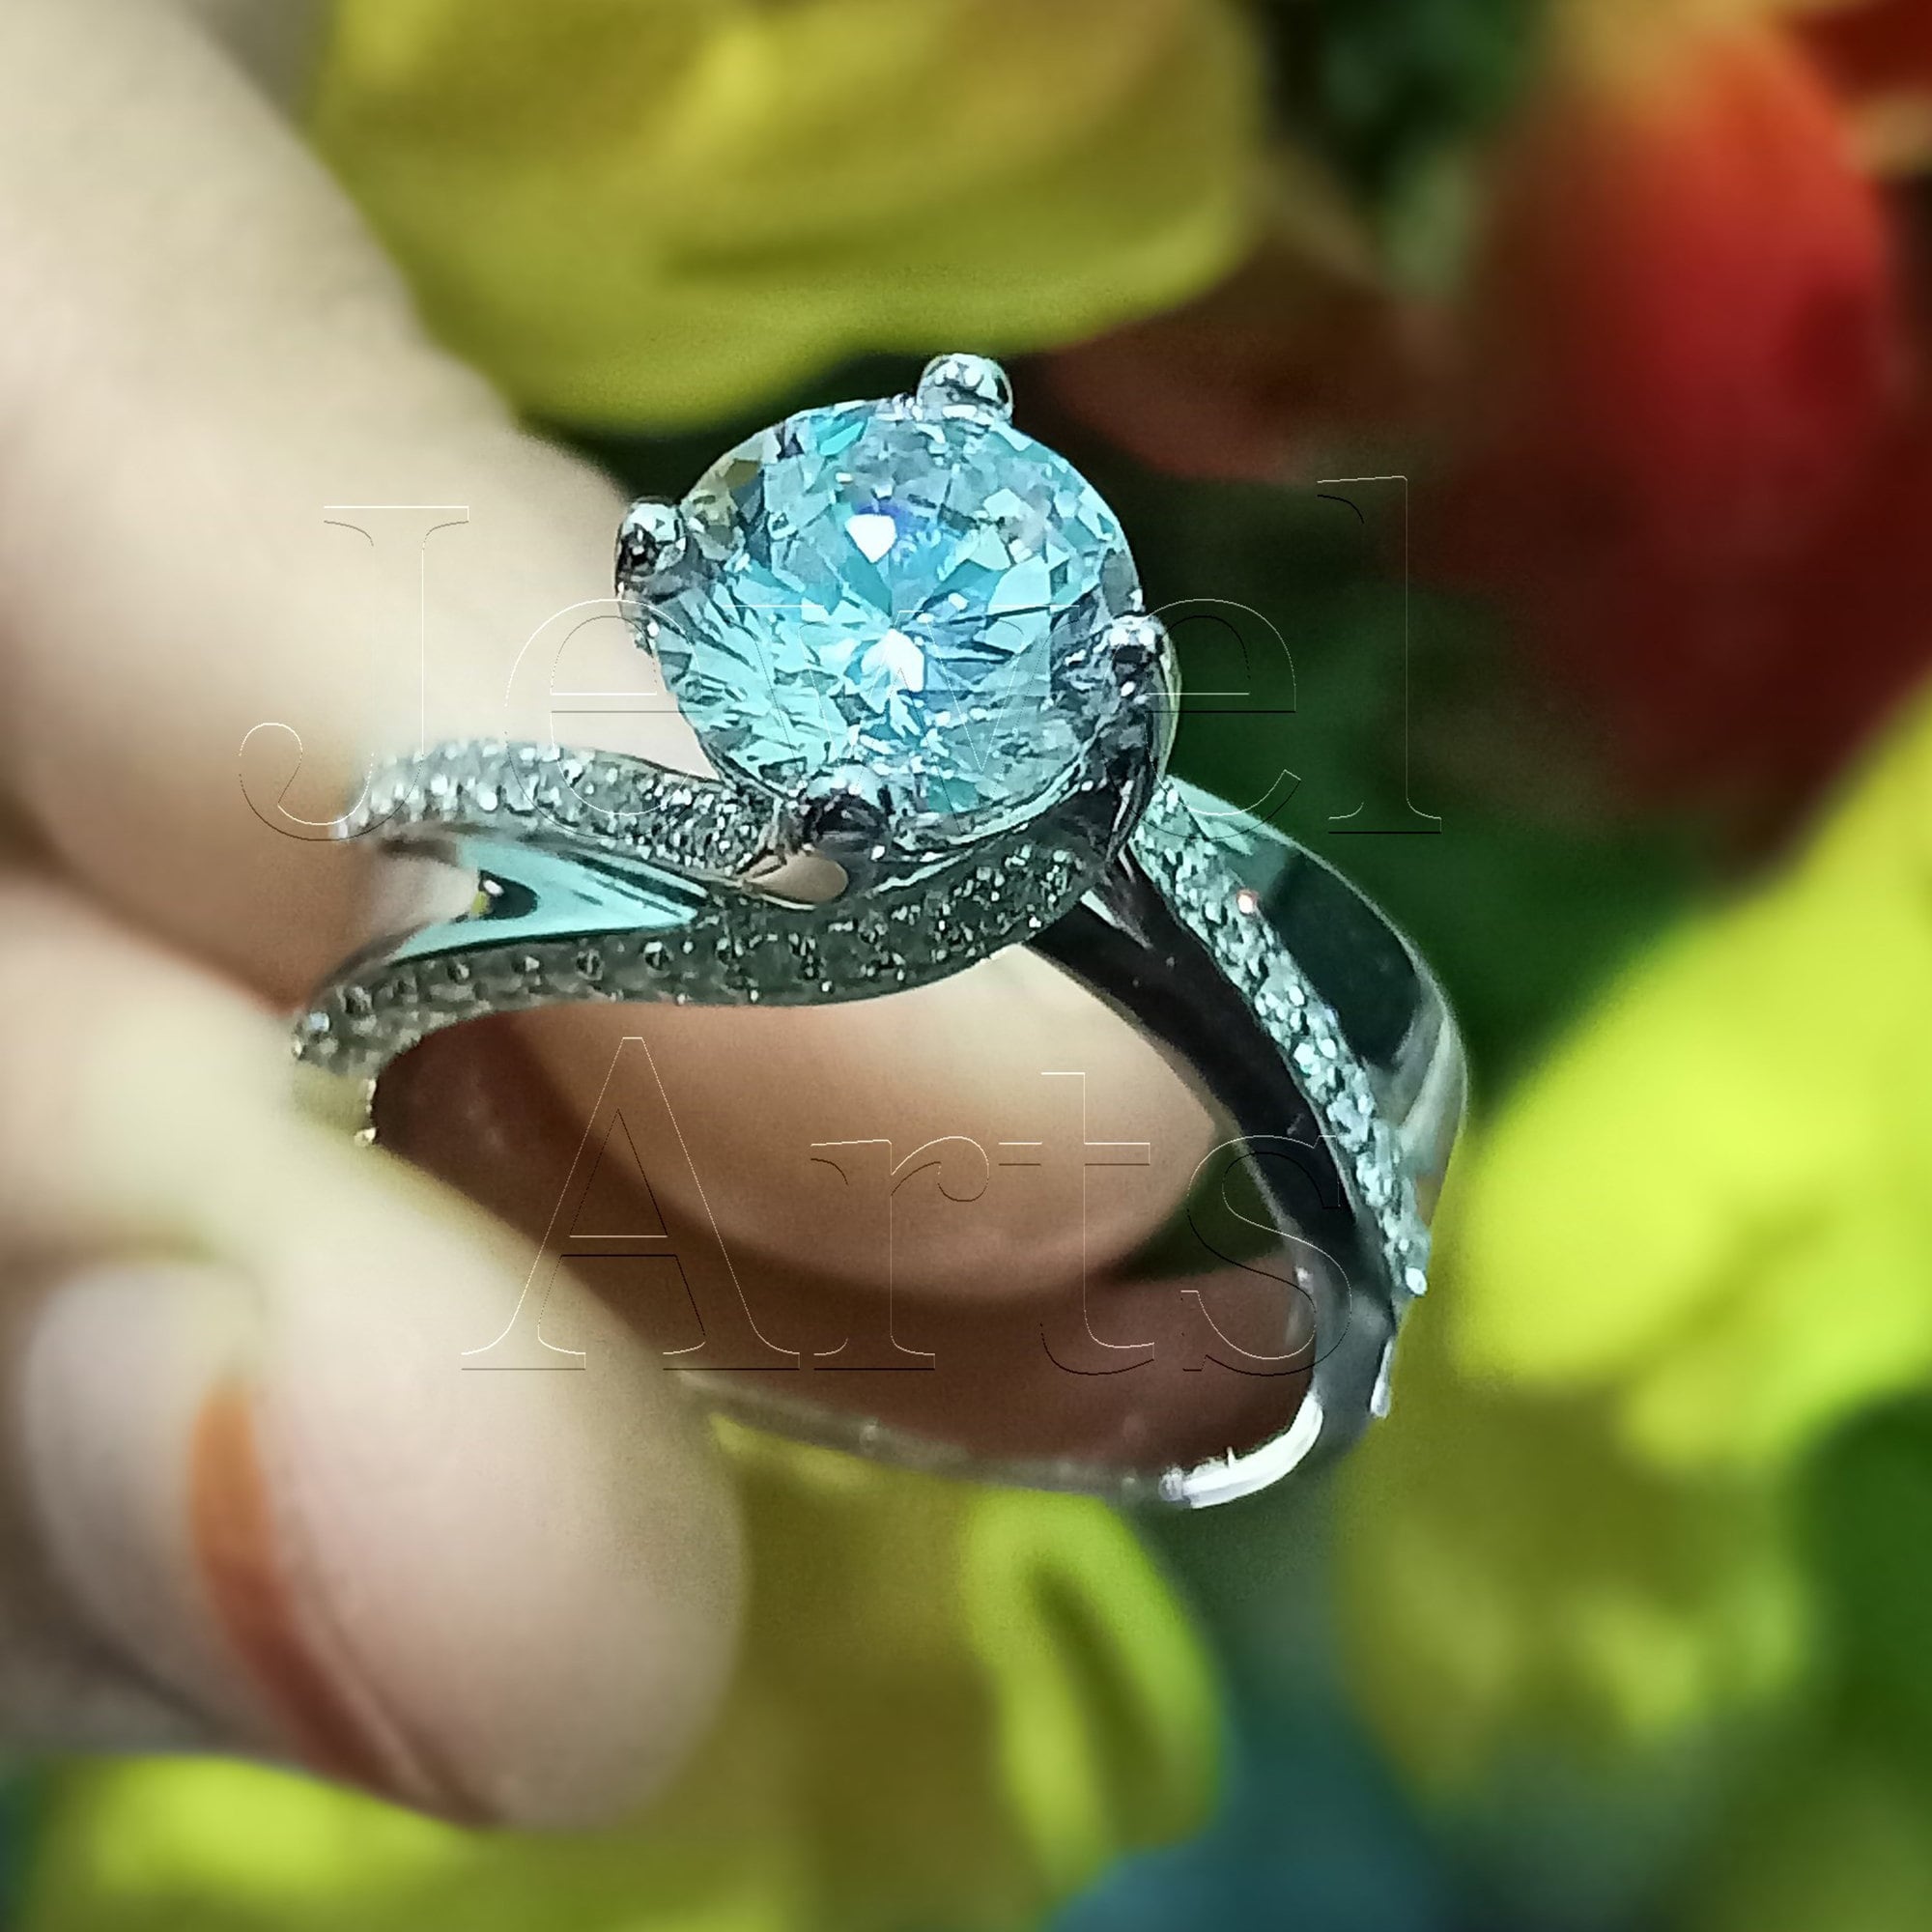 2.10ct round cut dvvs1 diamond fine engagement wedding ring 14k white gold over 